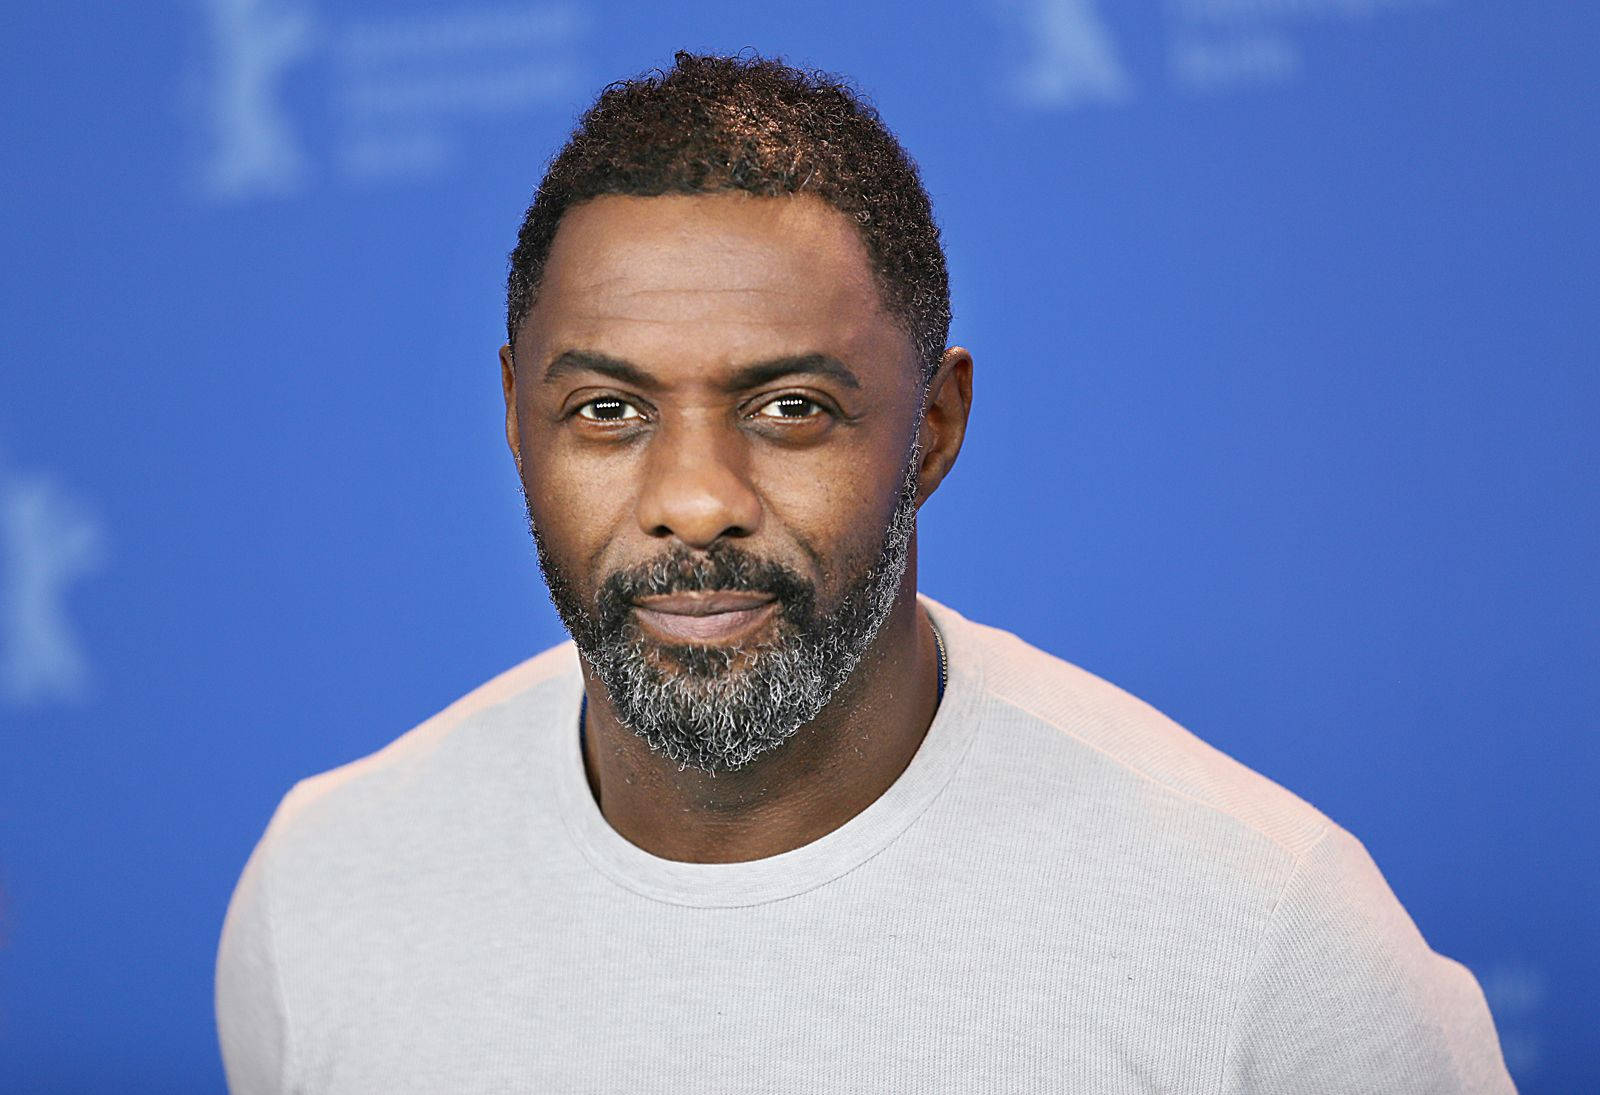 Idris Elba Against Blue Backdrop